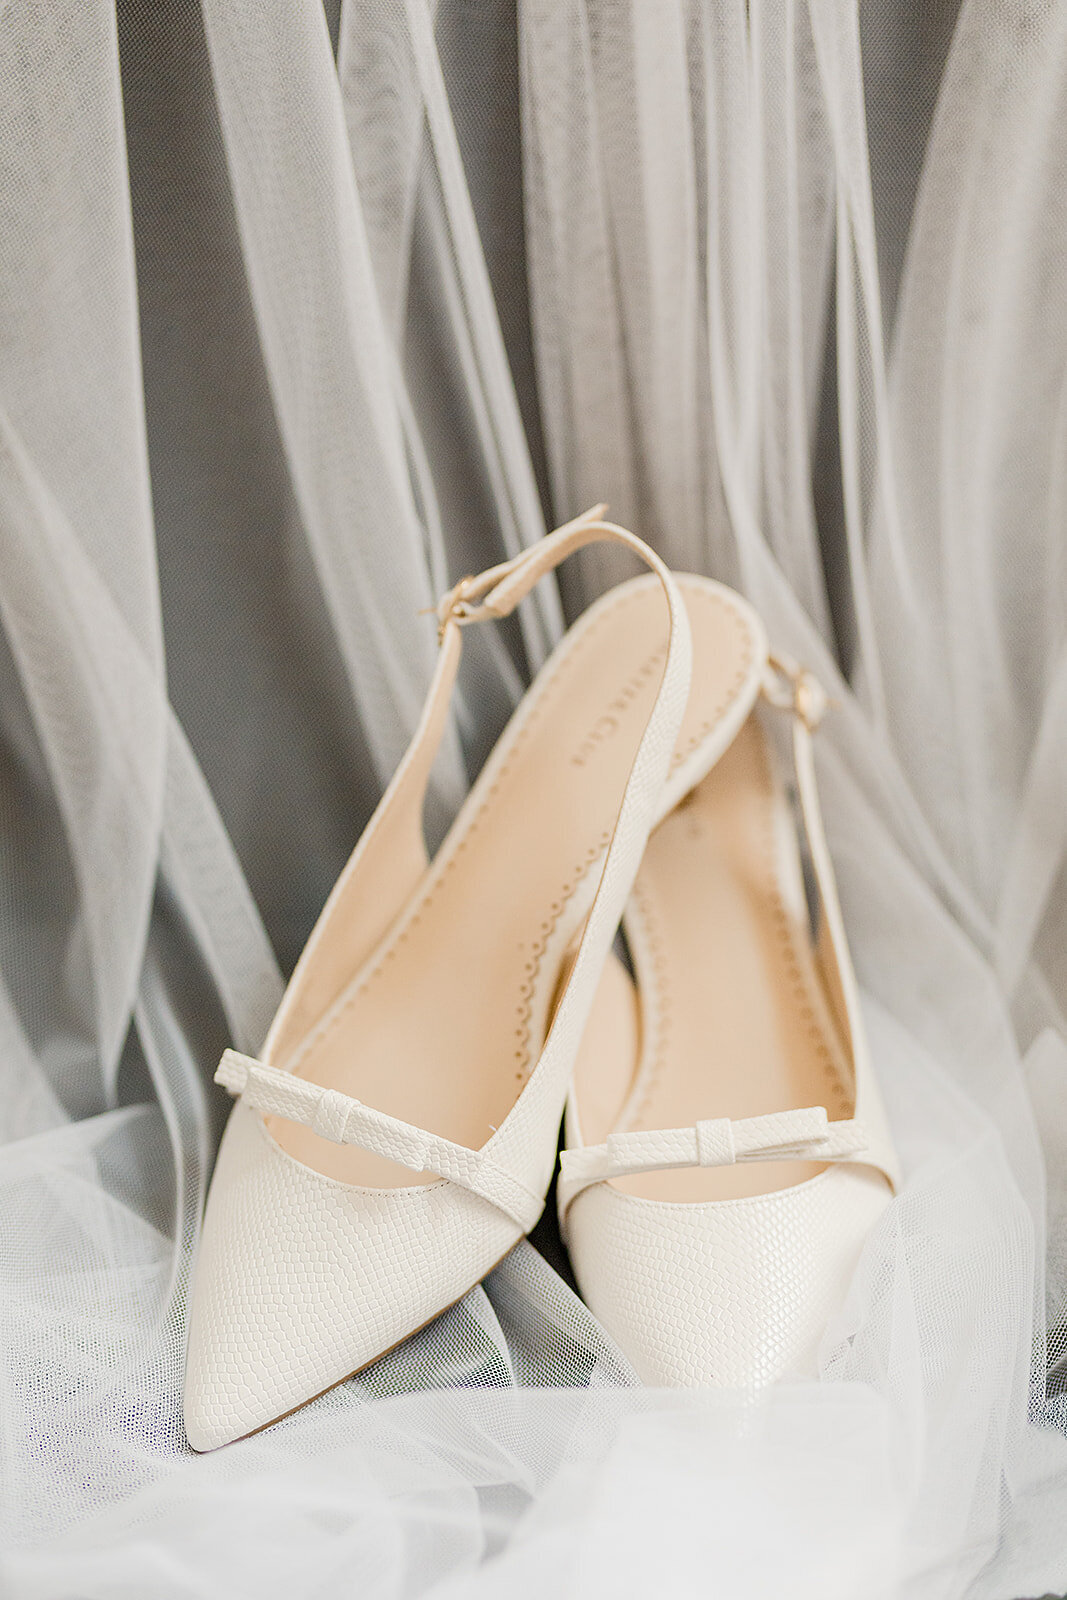 wedding shoes on a veil